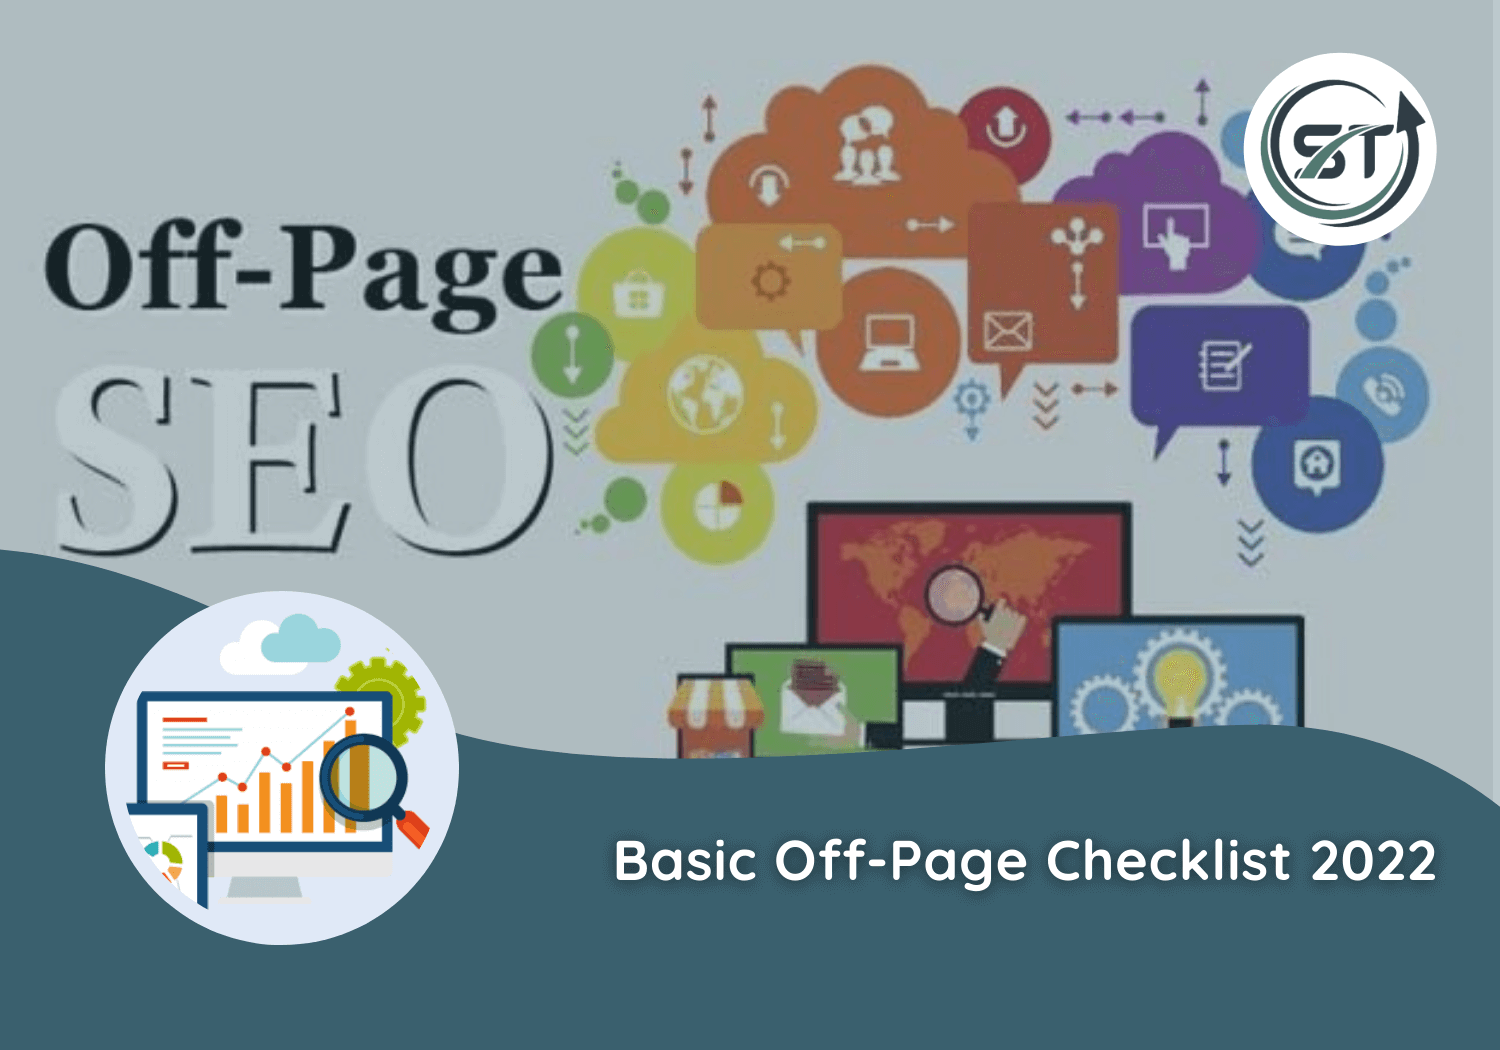 Basic Off-Page Checklist 2022